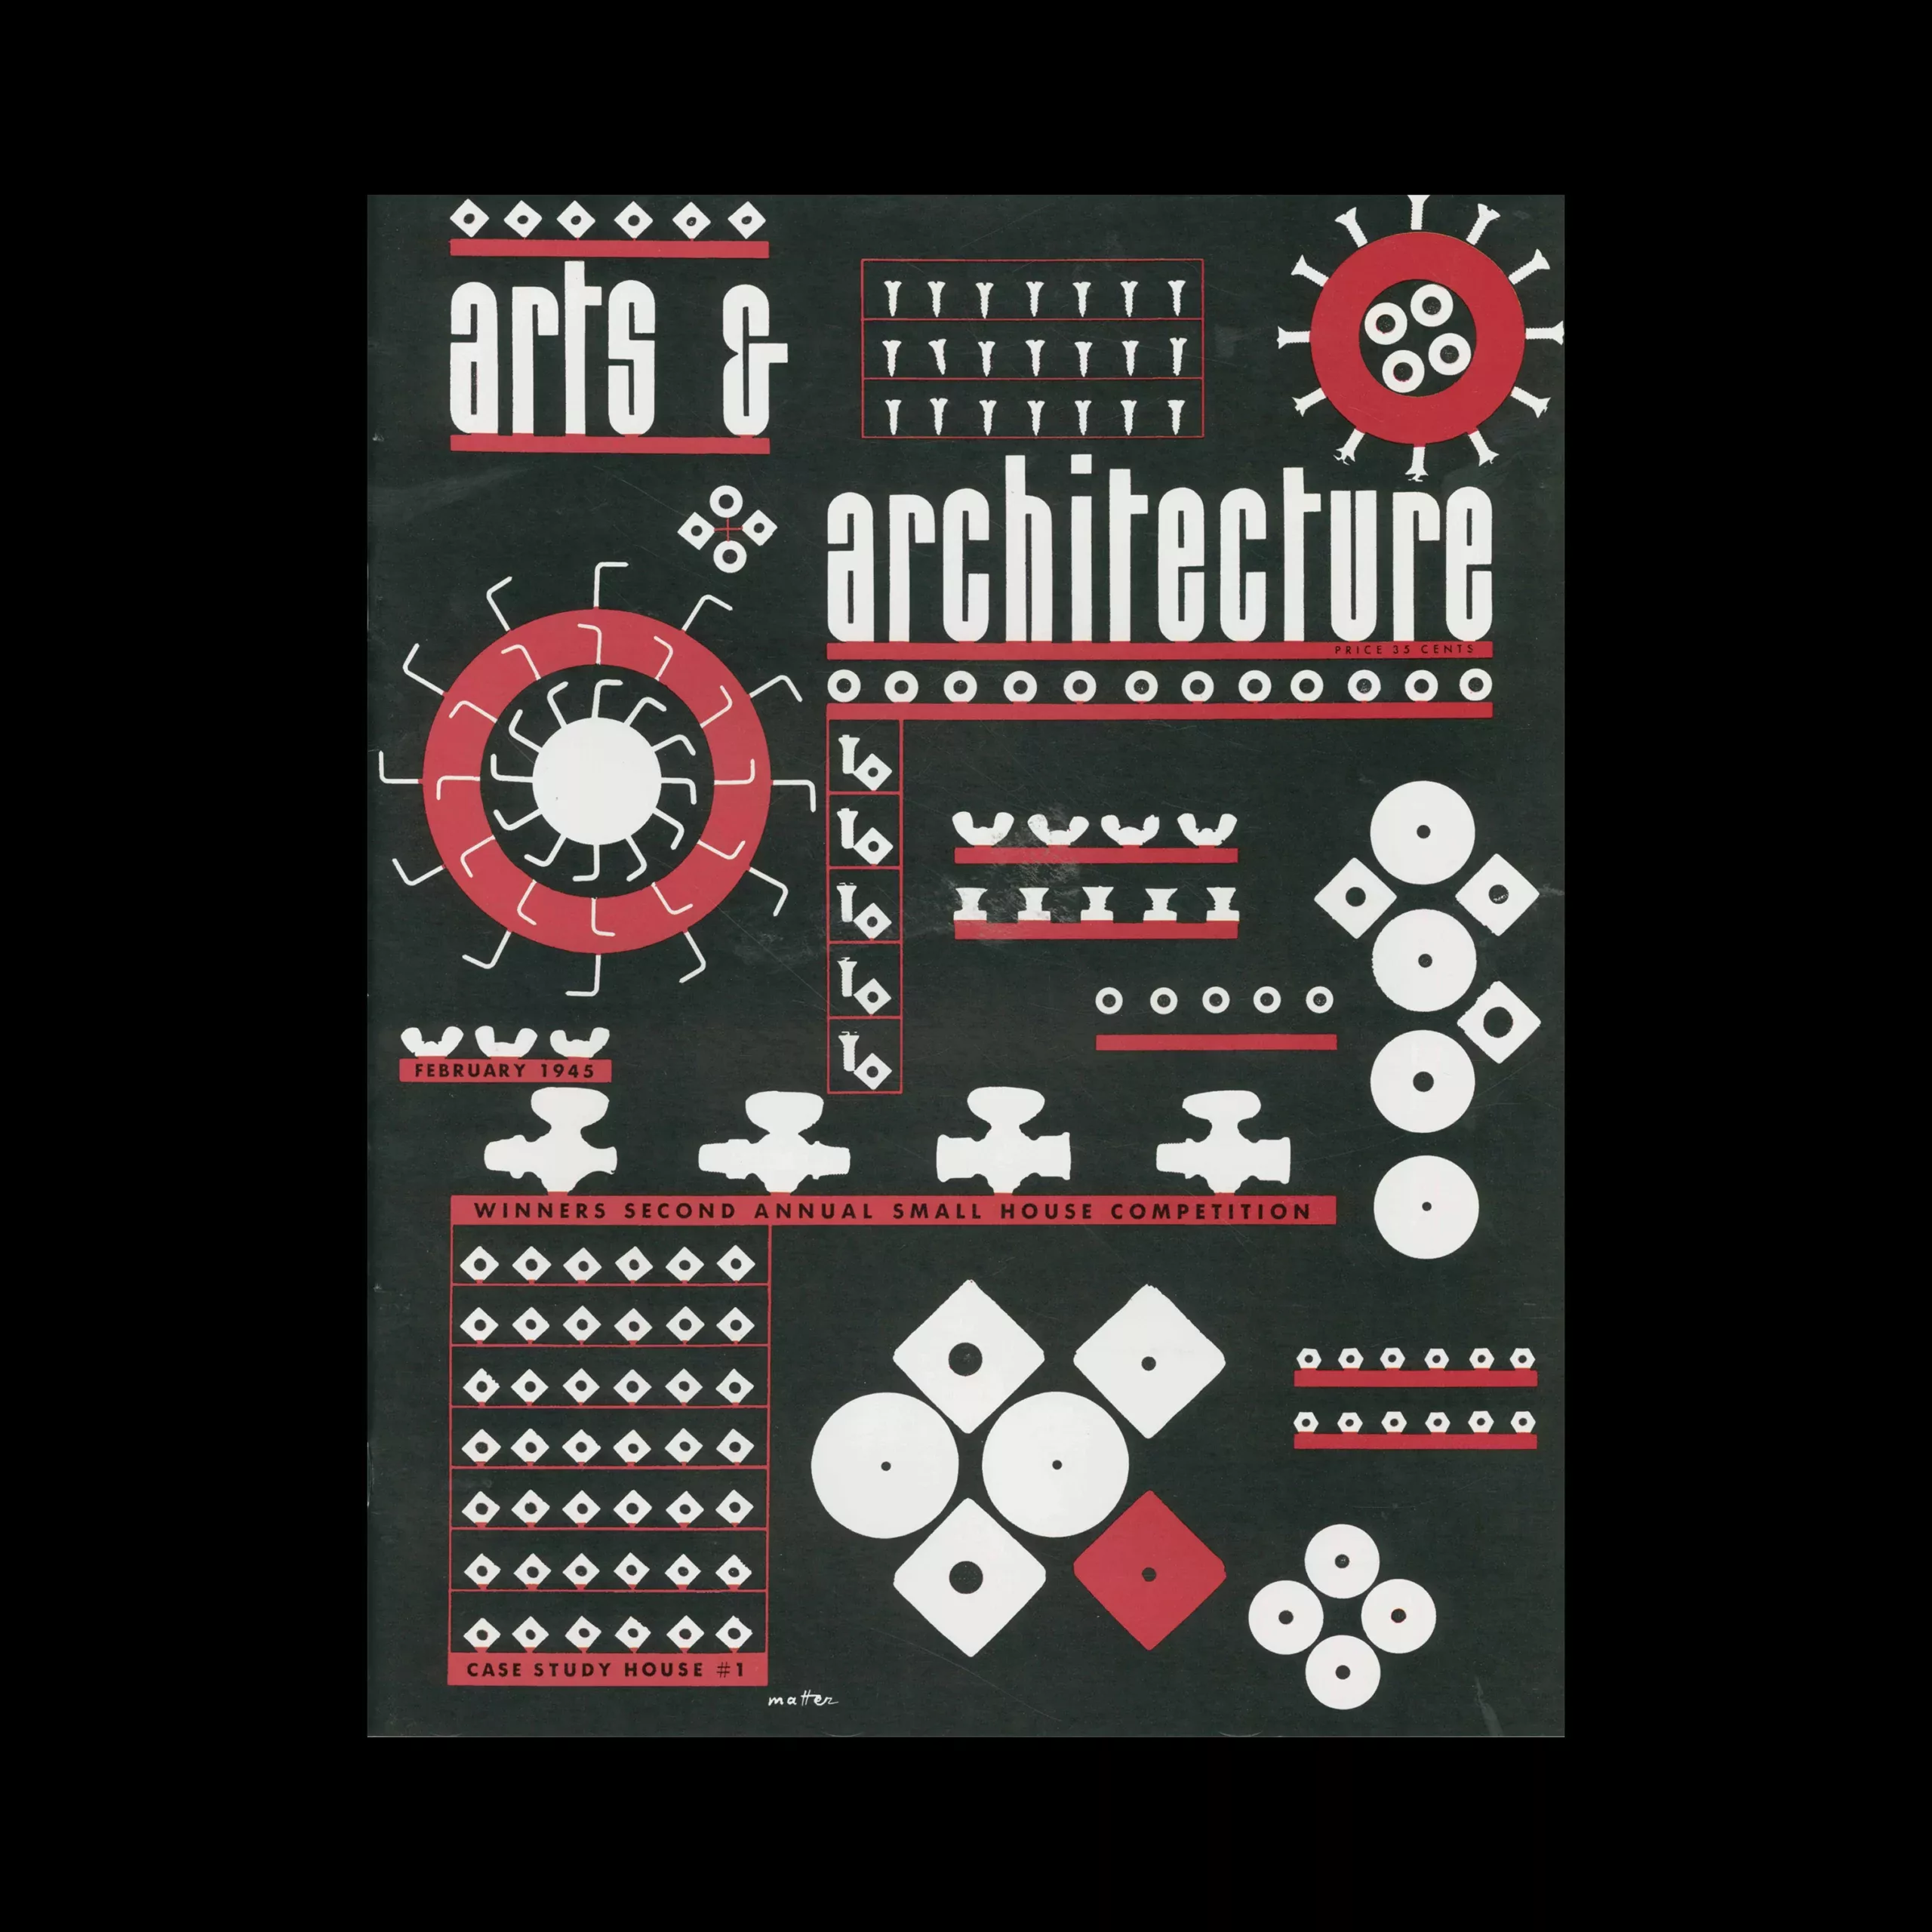 Arts & Architecture February 1945, Complete Reprint, Taschen, 2008. Cover design by Herbert Matter